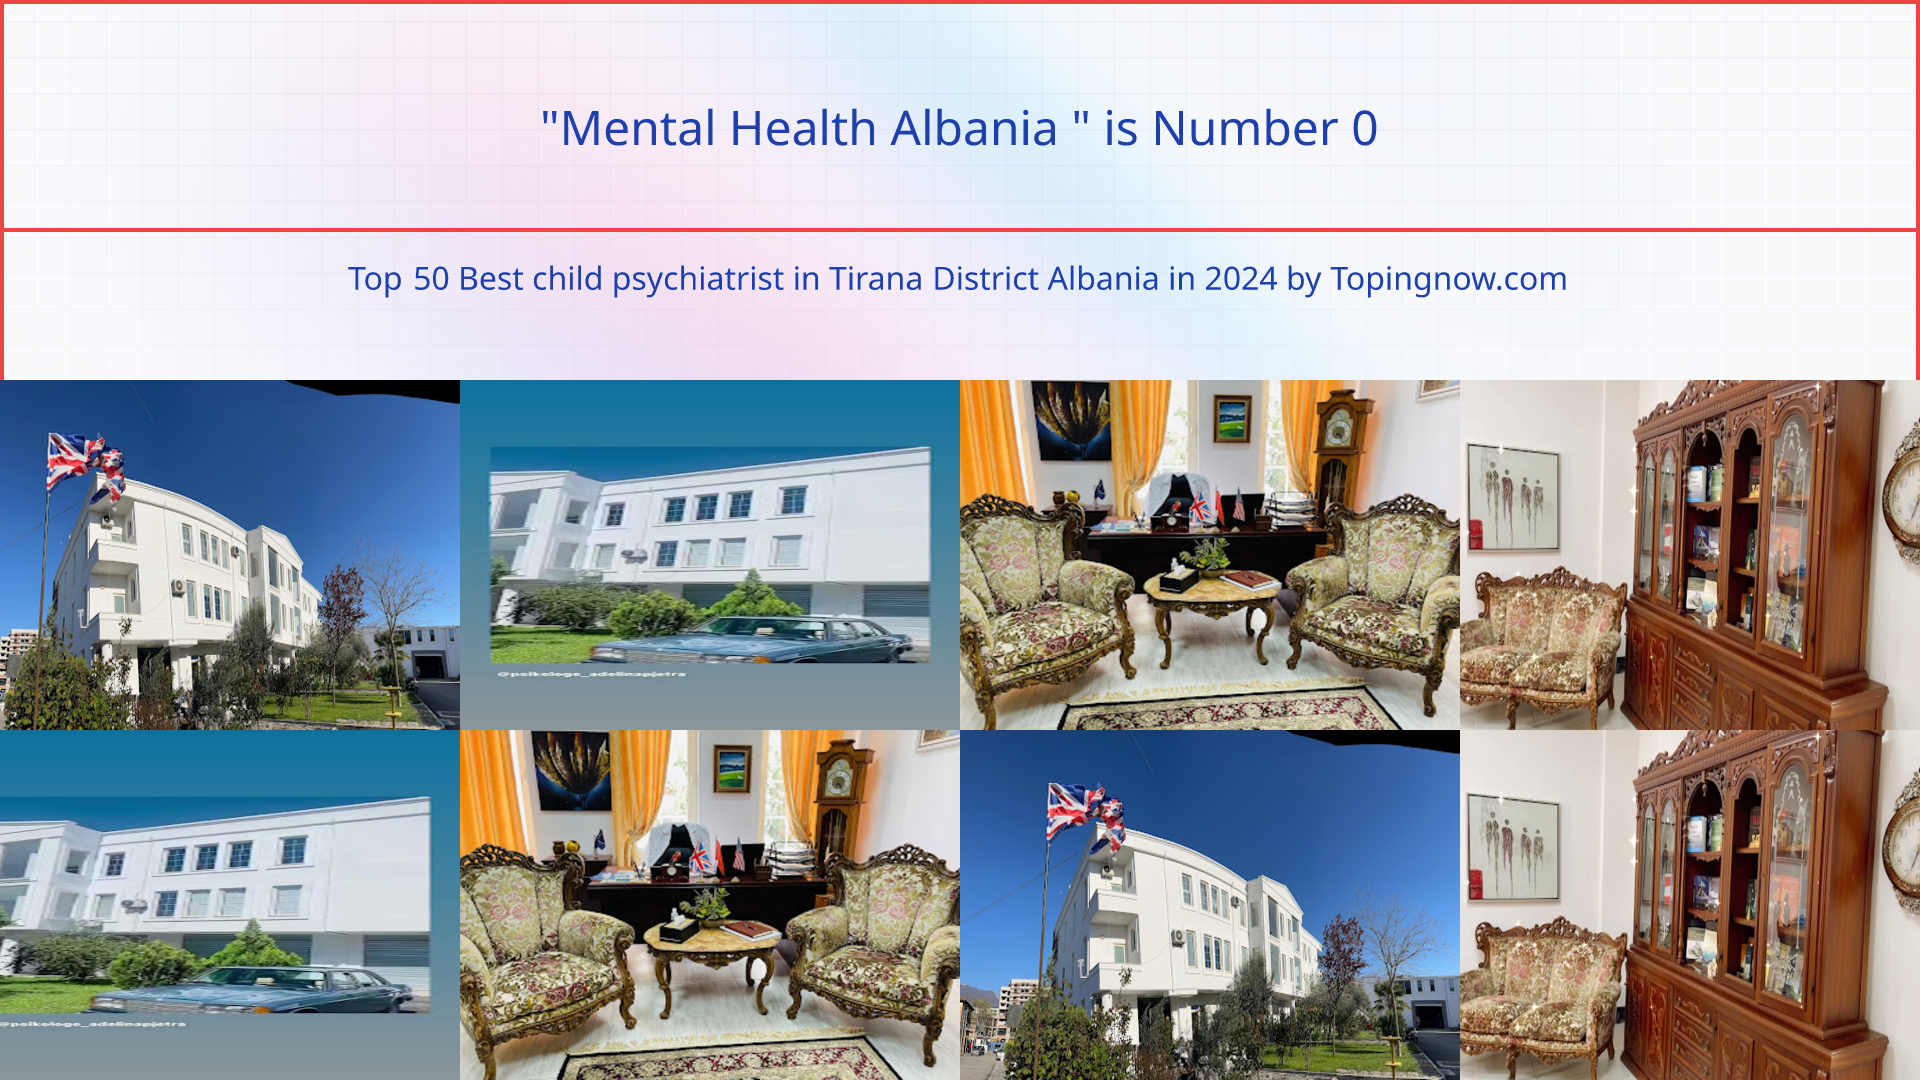 "Mental Health Albania ": Top 50 Best child psychiatrist in Tirana District Albania in 2024